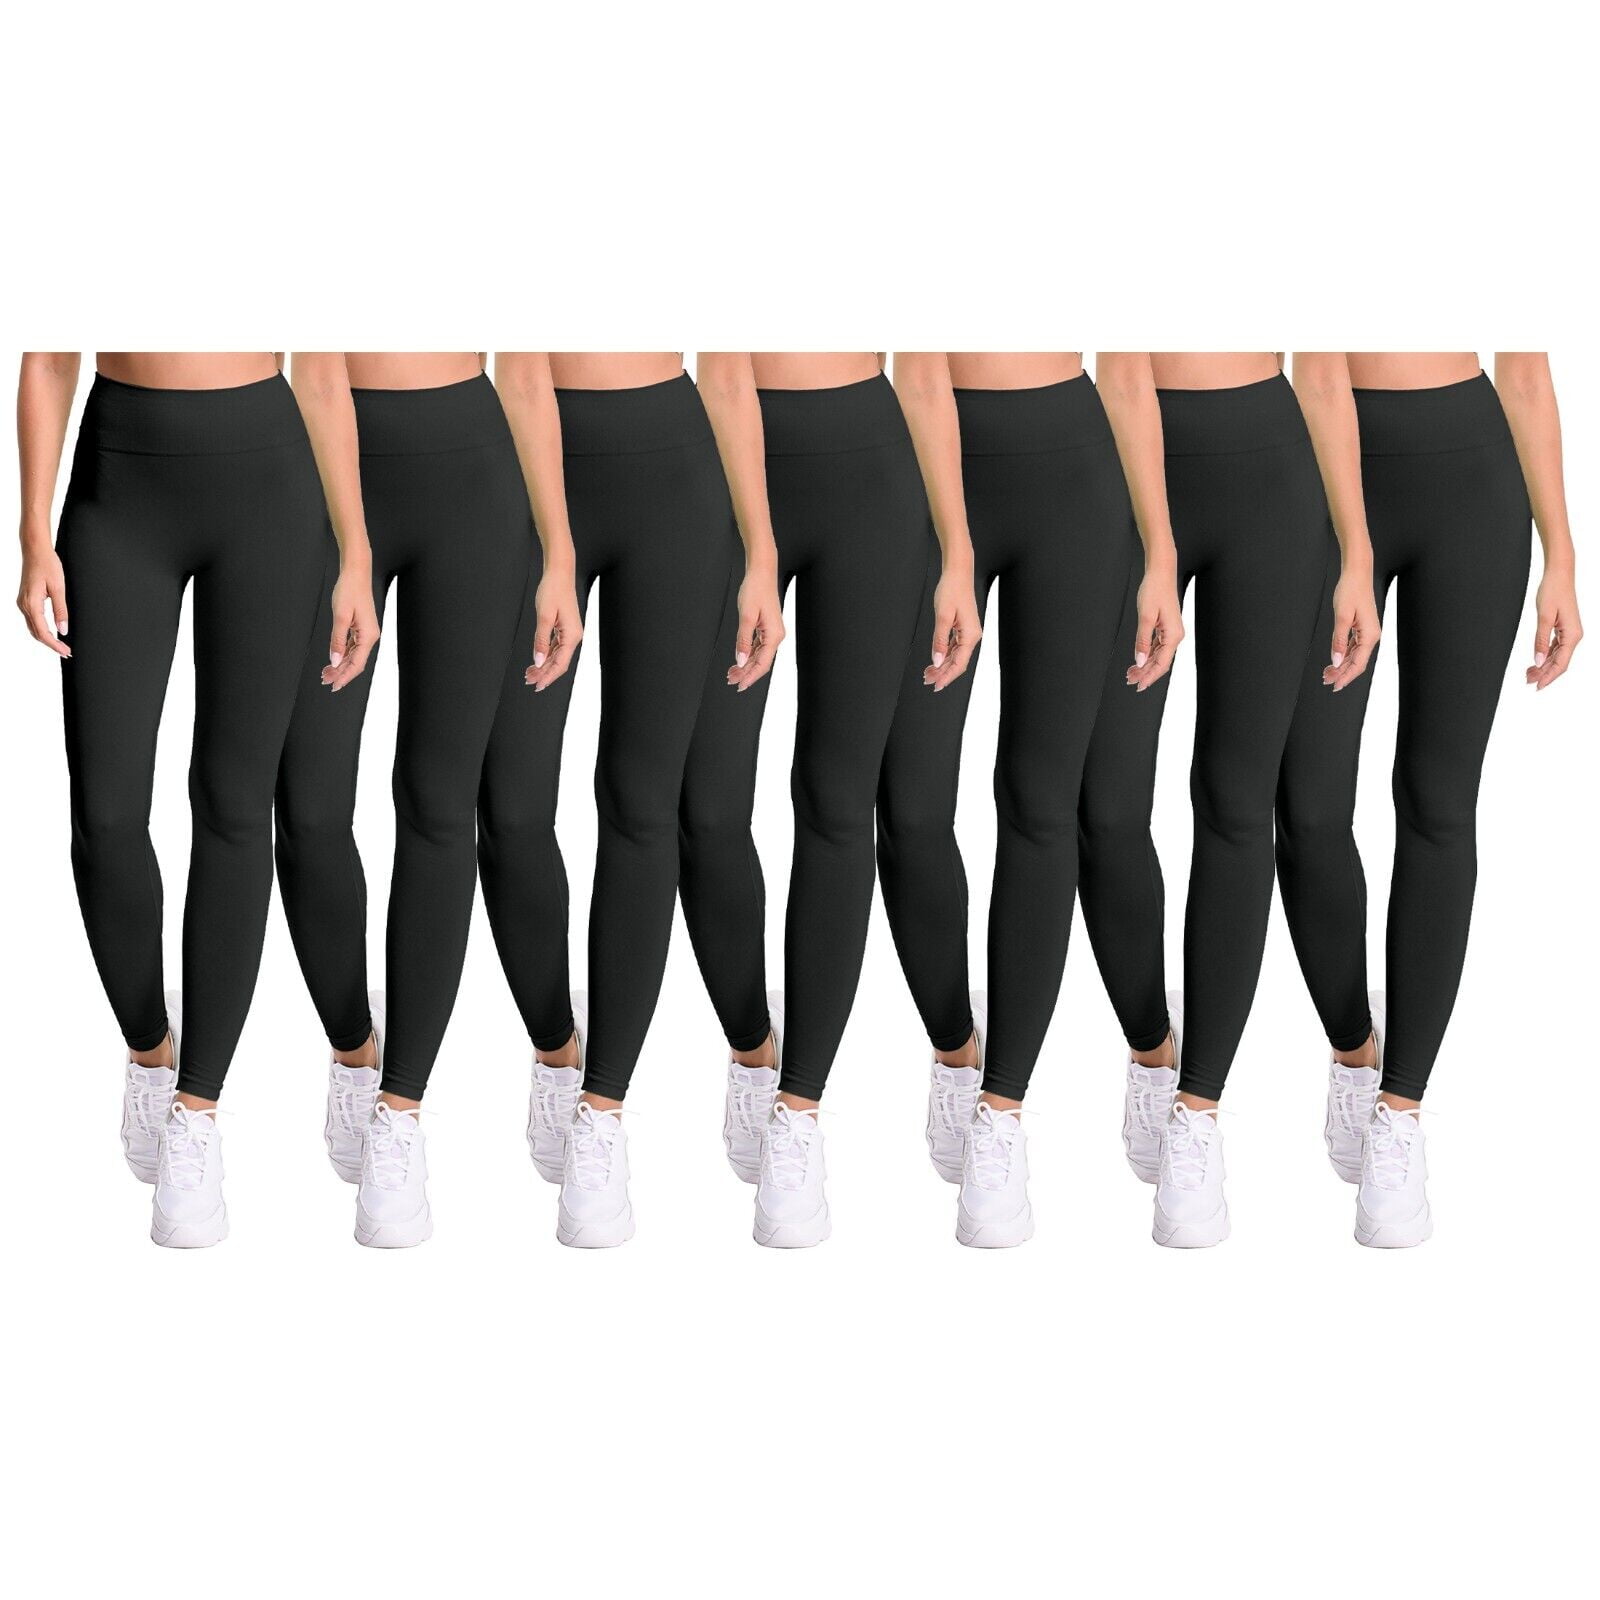 6-Pack: Women's Cozy Soft Fleece-Lined Workout Yoga Pants Seamless Leggings  - Walmart.com